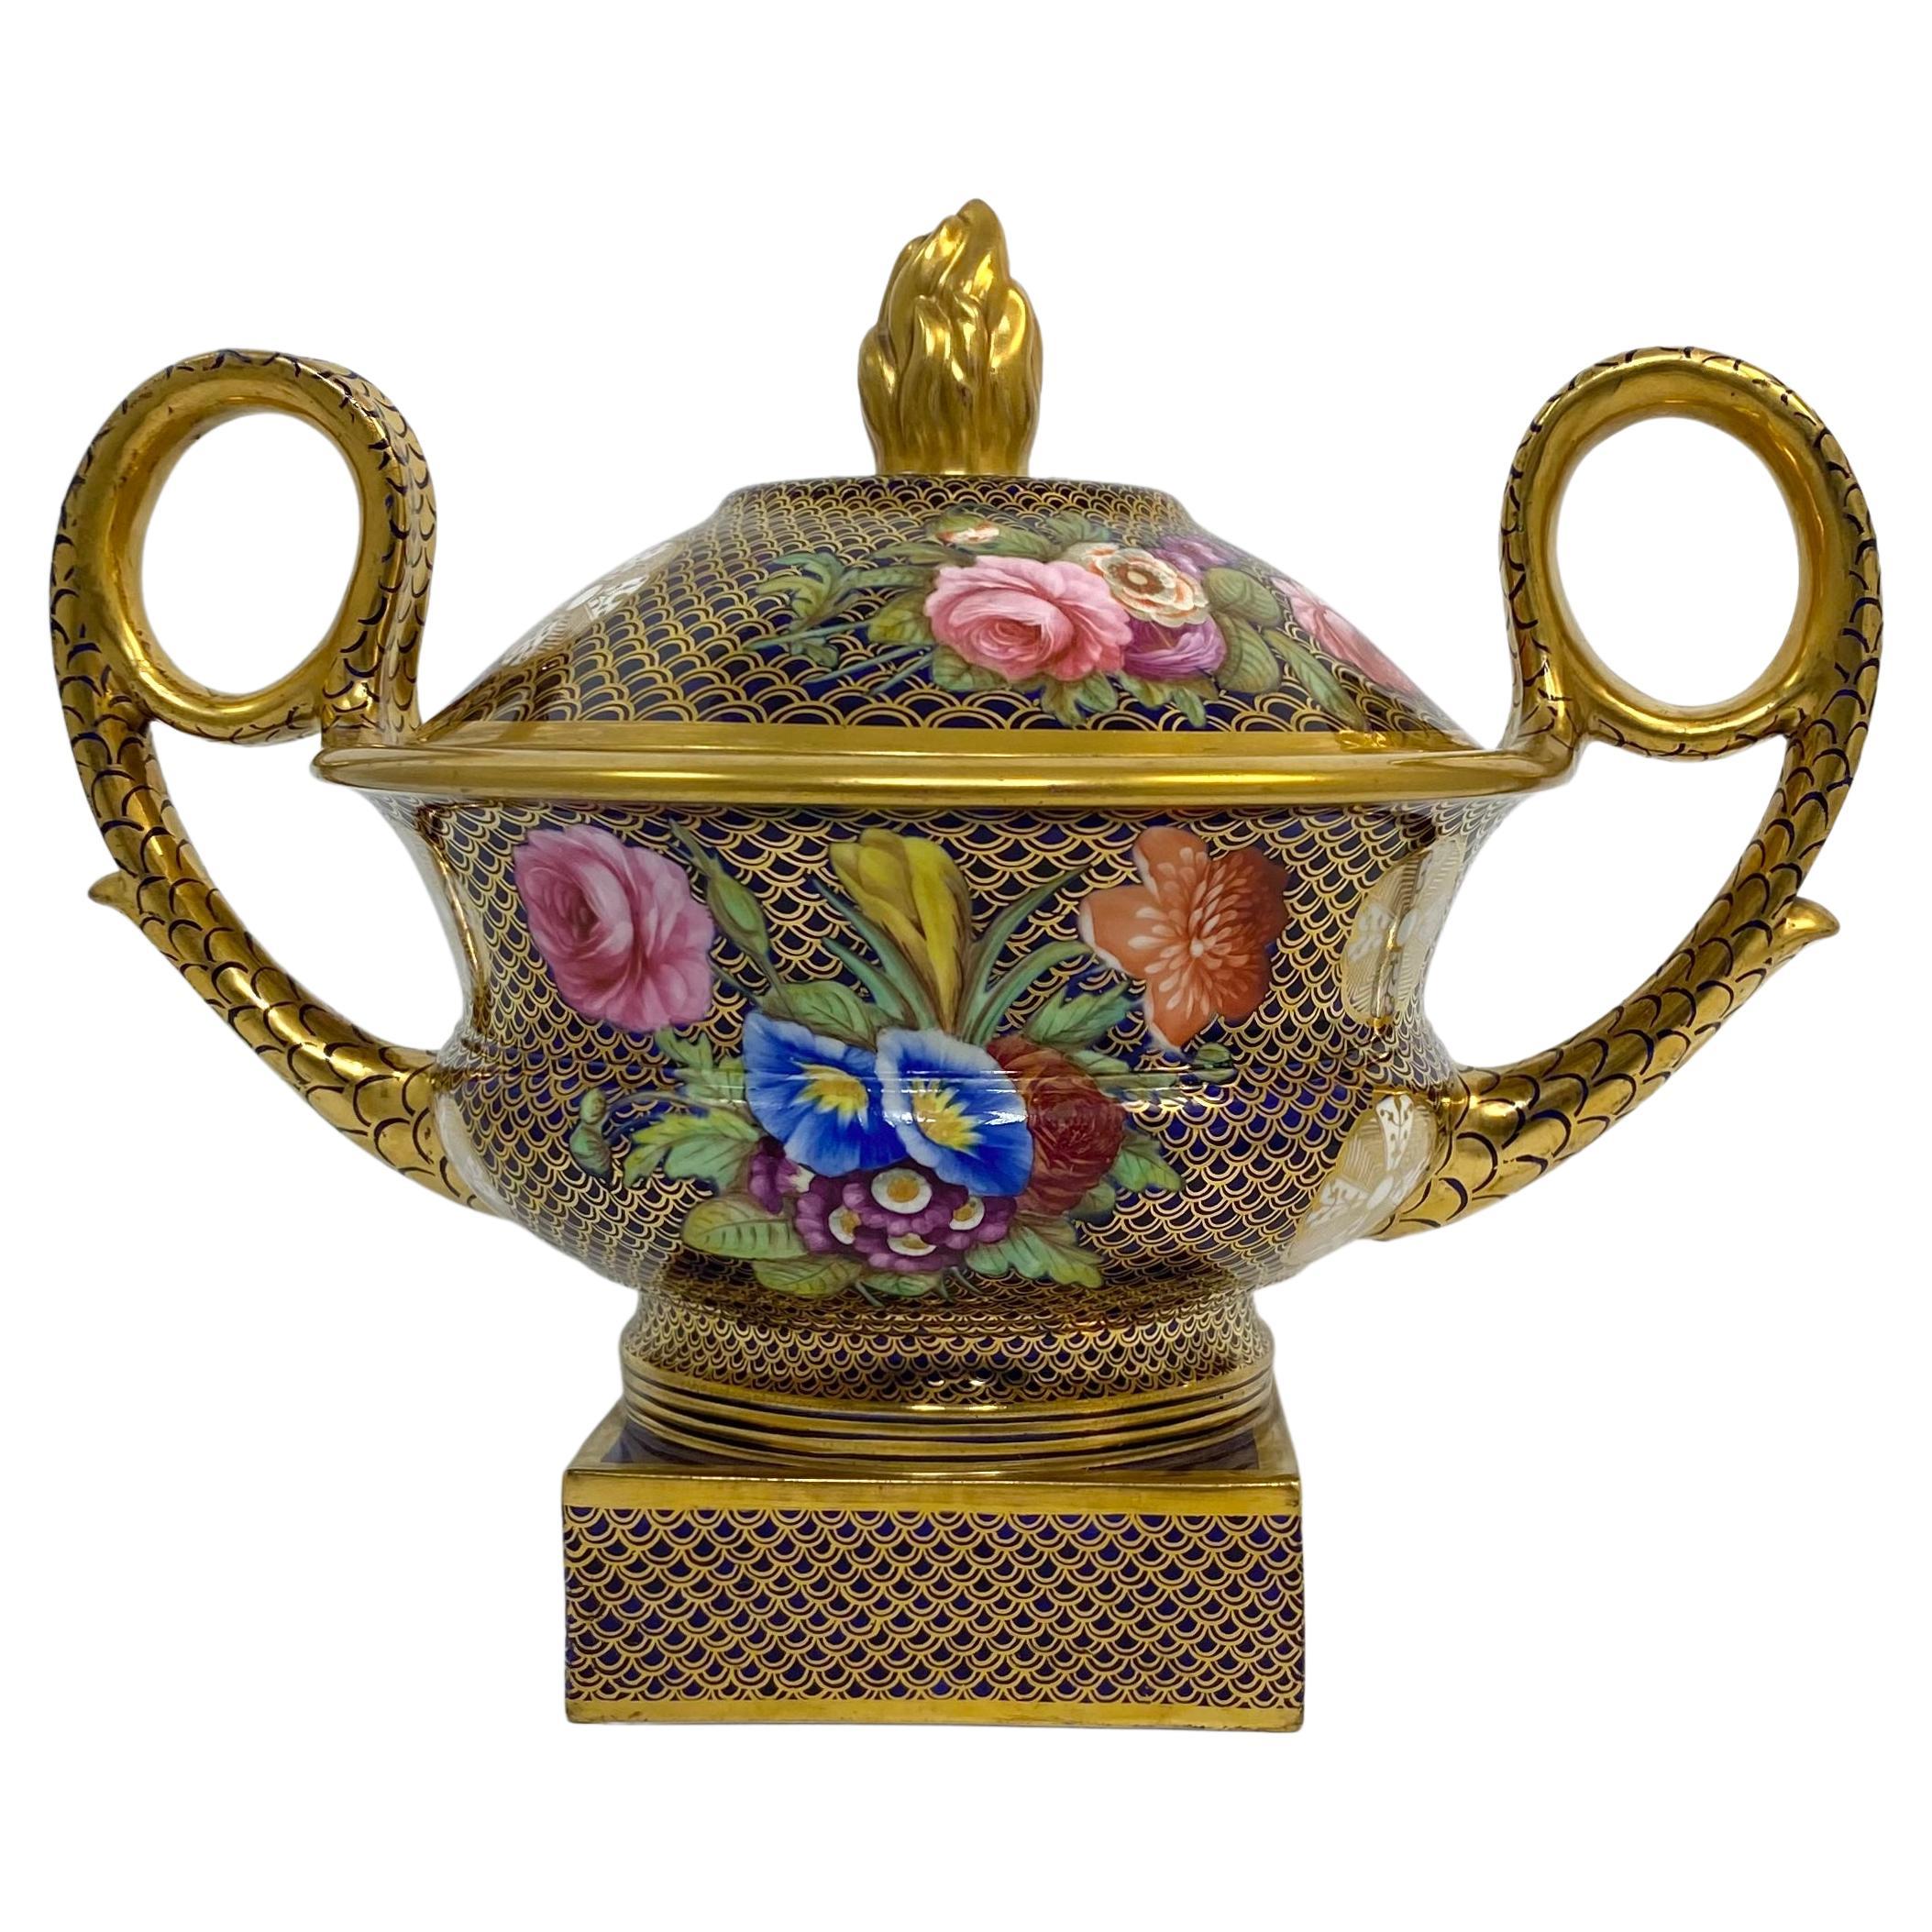 Spode porcelain pot pourri and cover, ‘1166’ pattern, c. 1820.